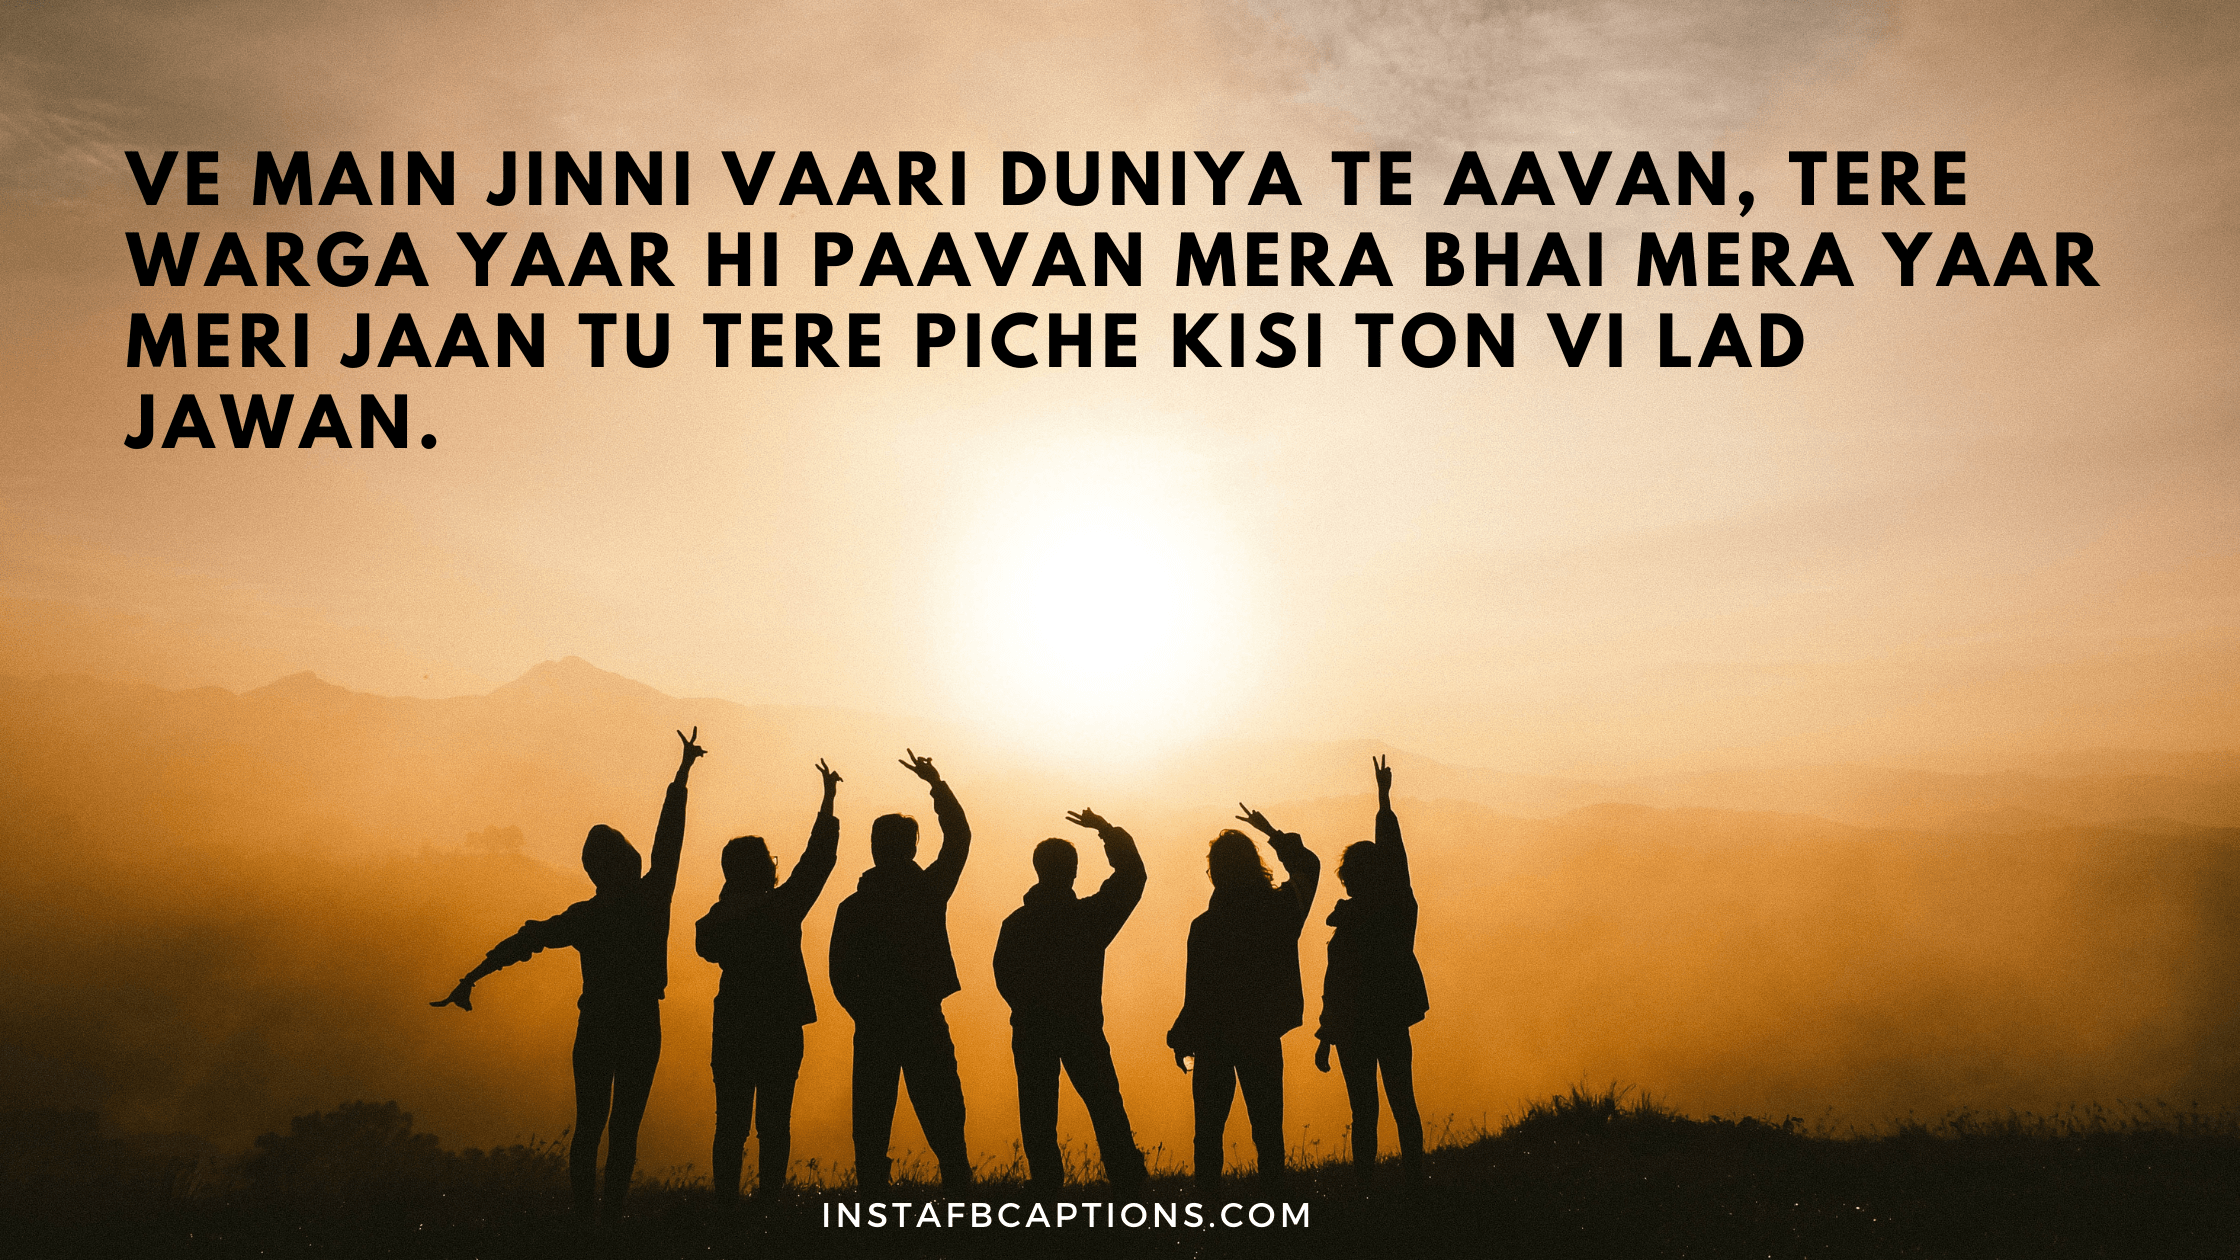 Punjabi Song Lyrics Caption On Friendship  - Friendship Punjabi Captions For Social Media Post - [New Captions] Best Punjabi Lyrics Captions For Instagram 2023